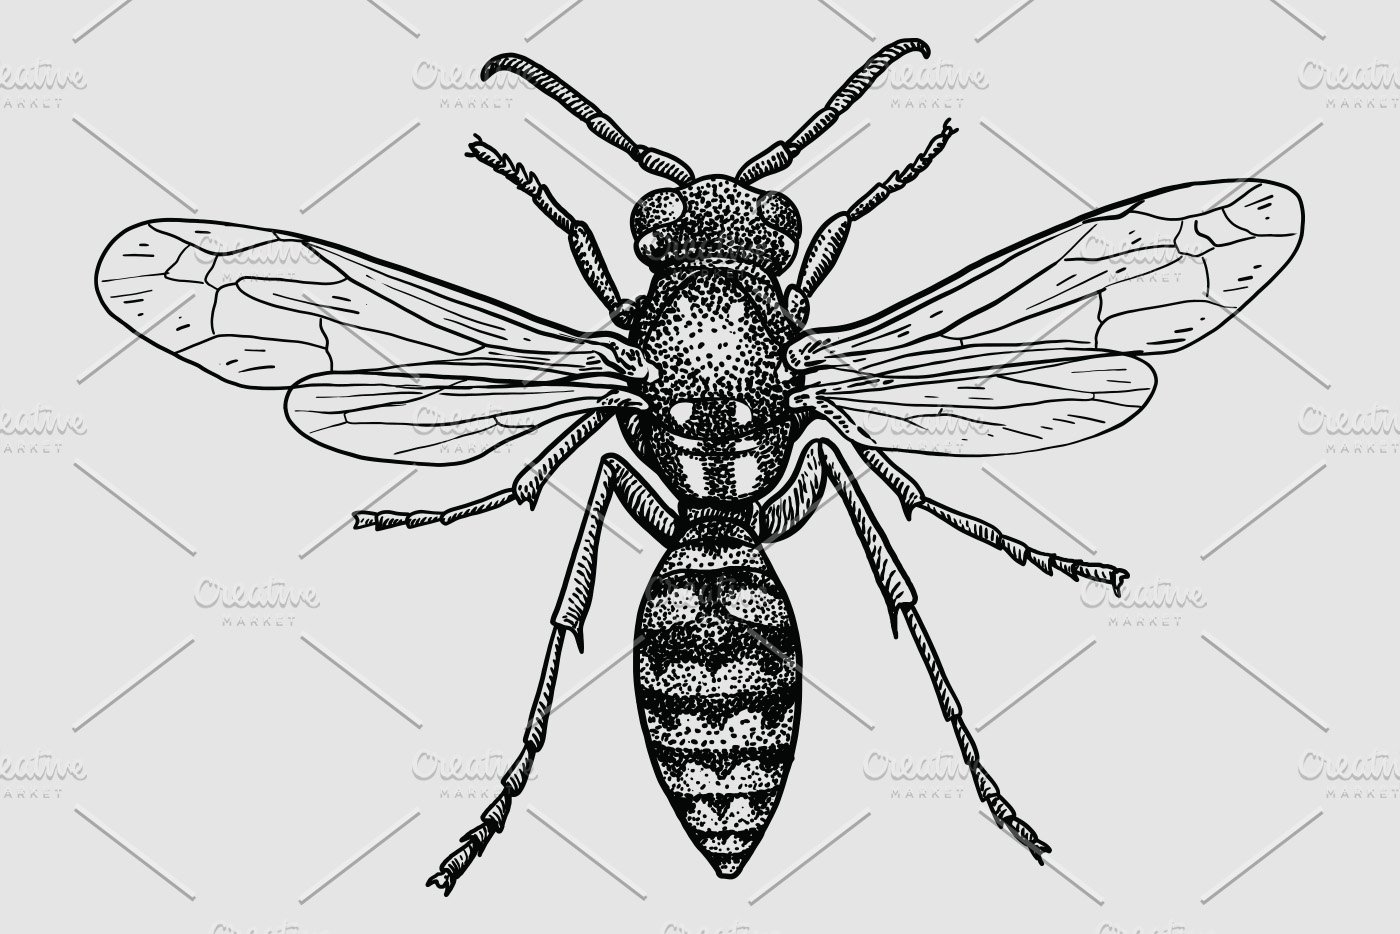 Wasp illustration cover image.